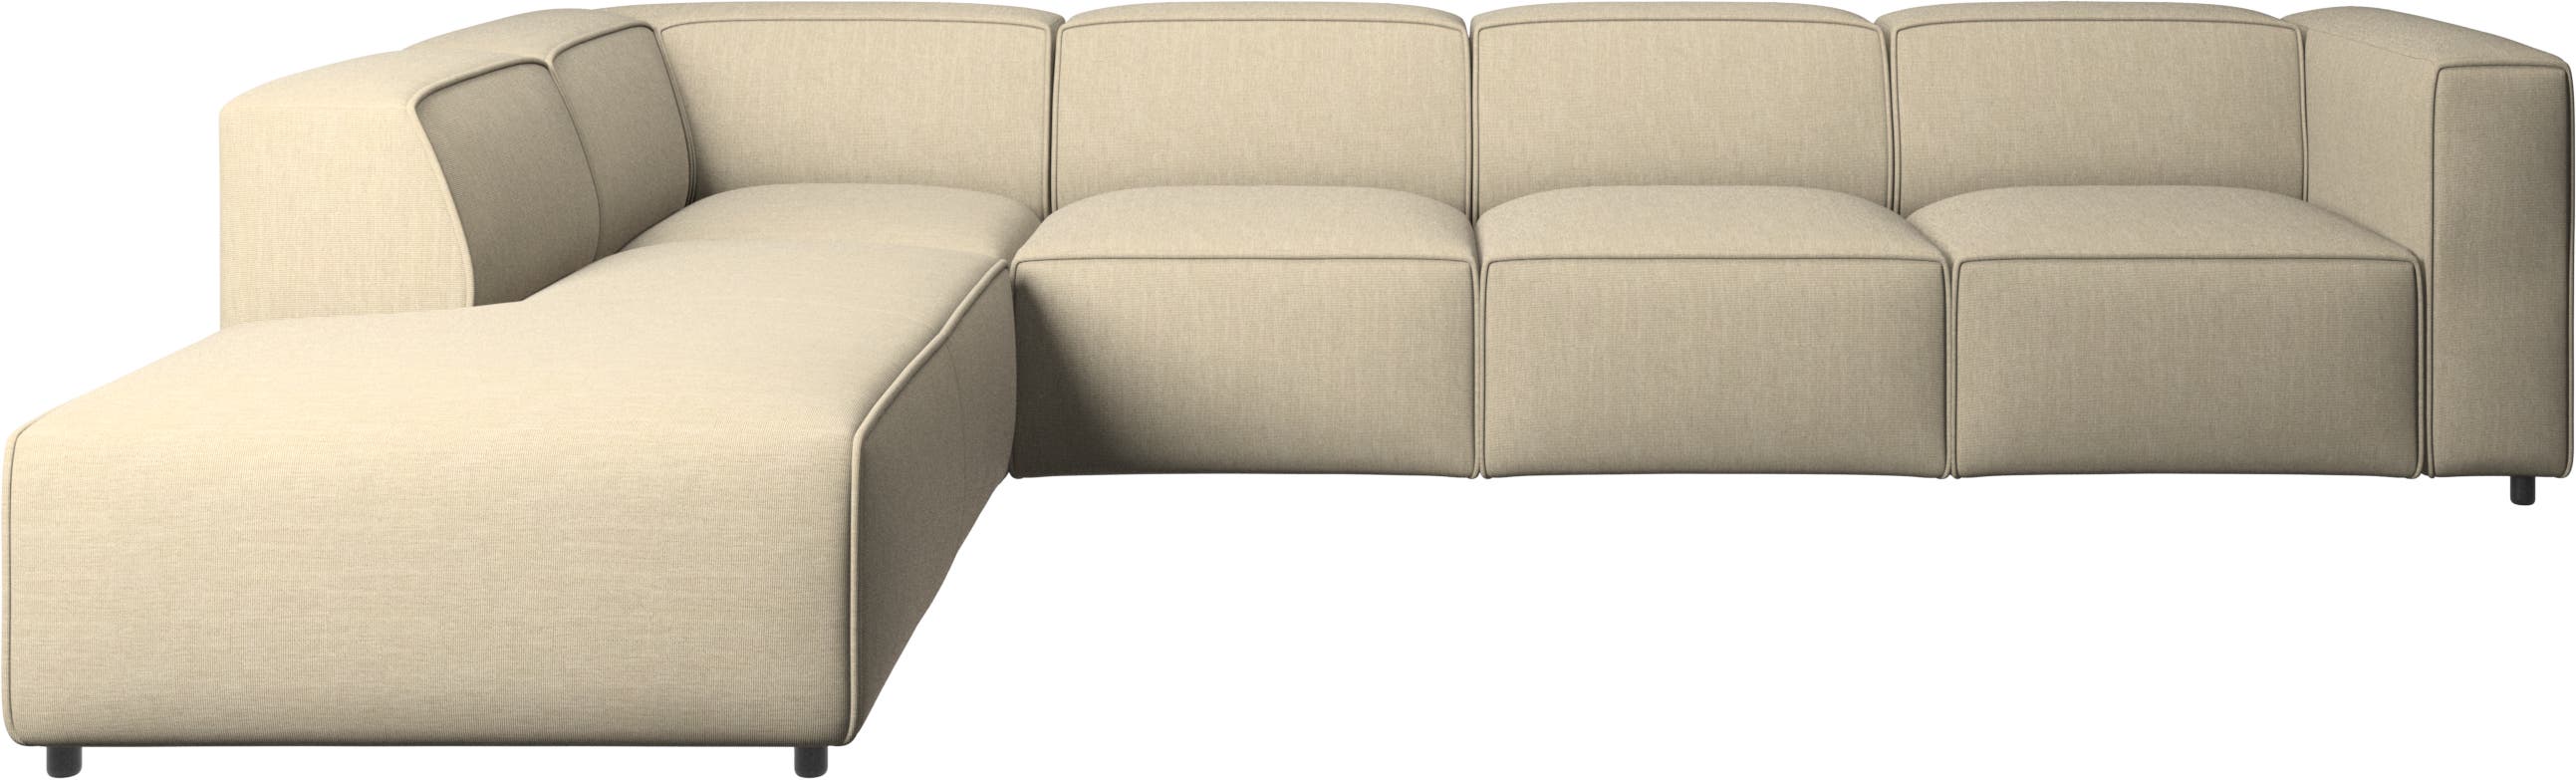 Carmo corner sofa